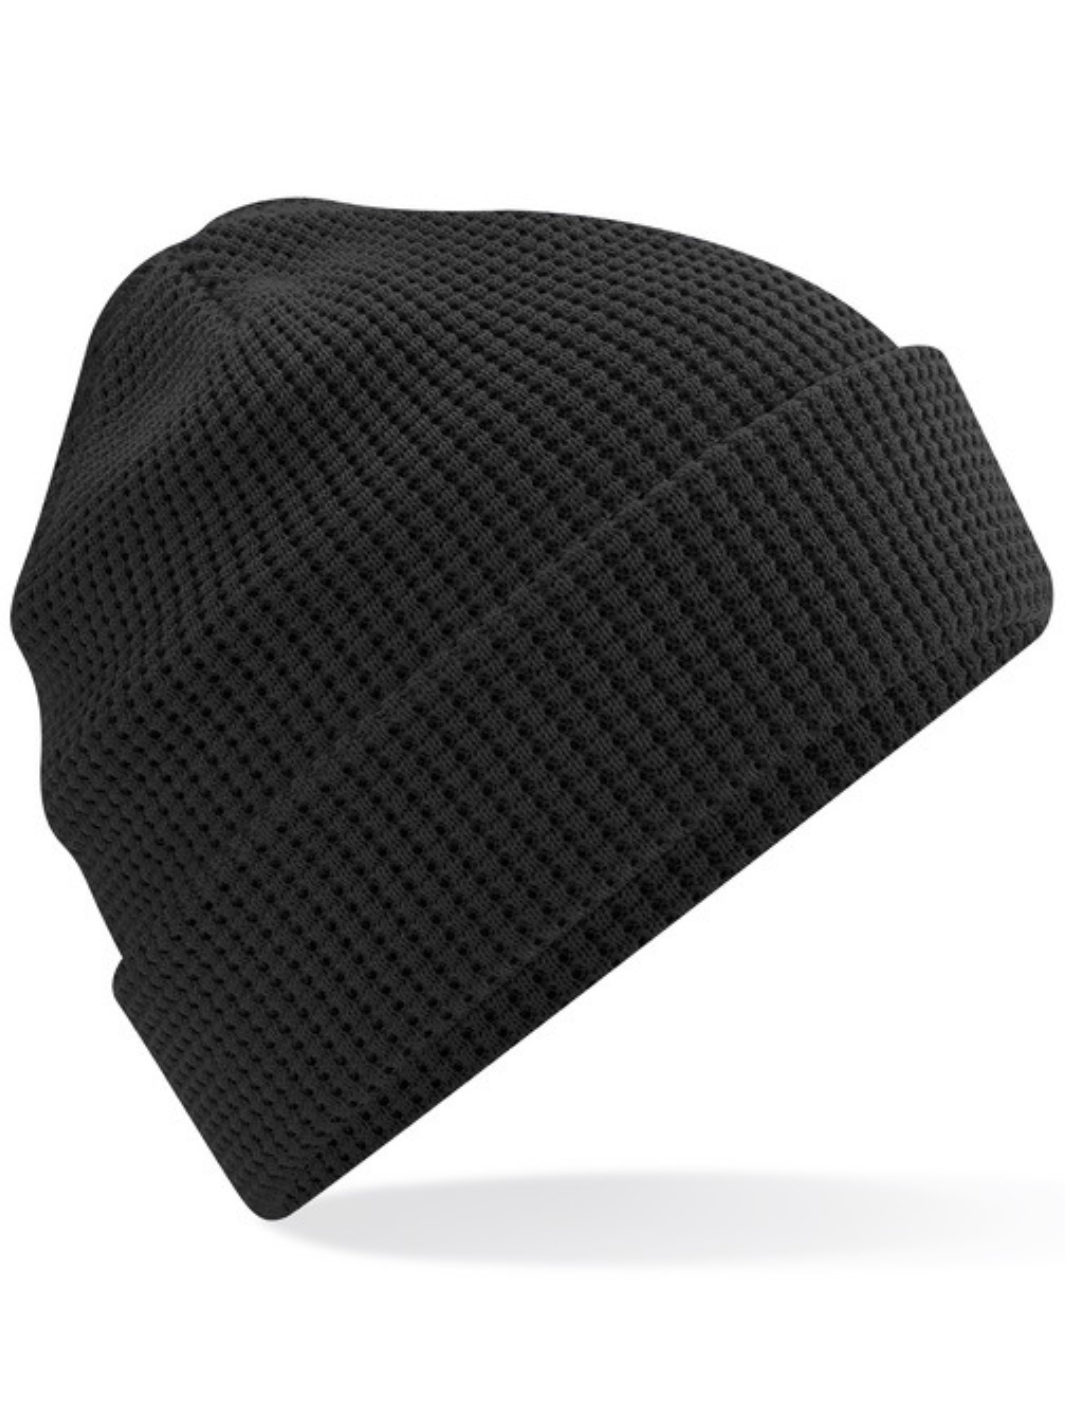 Black Heat cap